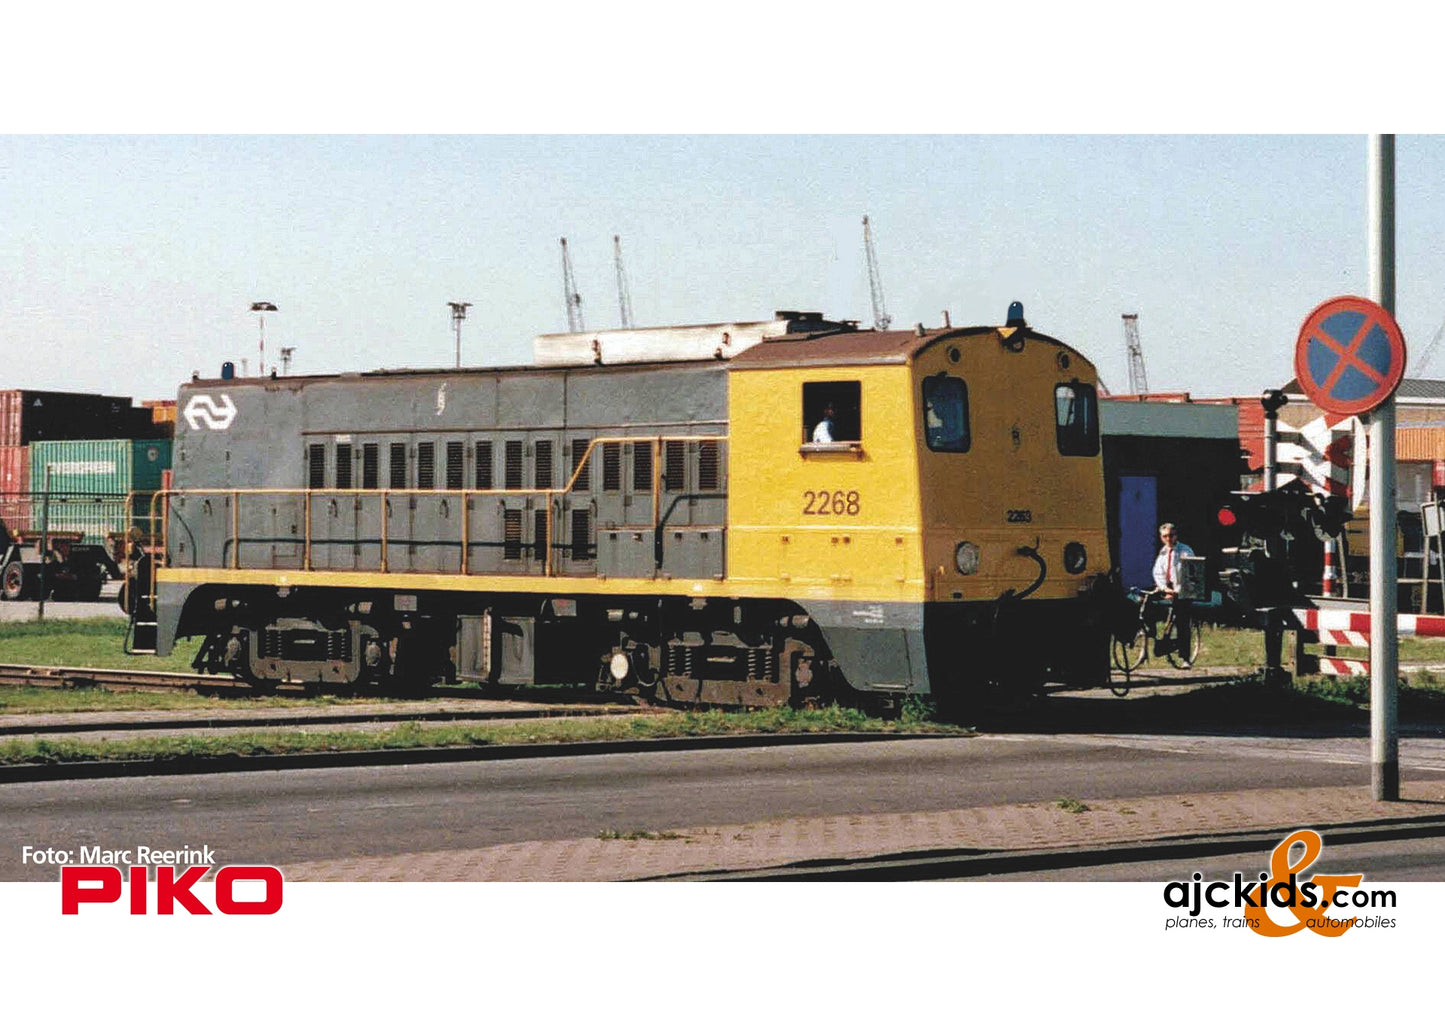 Piko 52933 - Rh 2200 Diesel Locomotive, Sound Radiolok NS IV